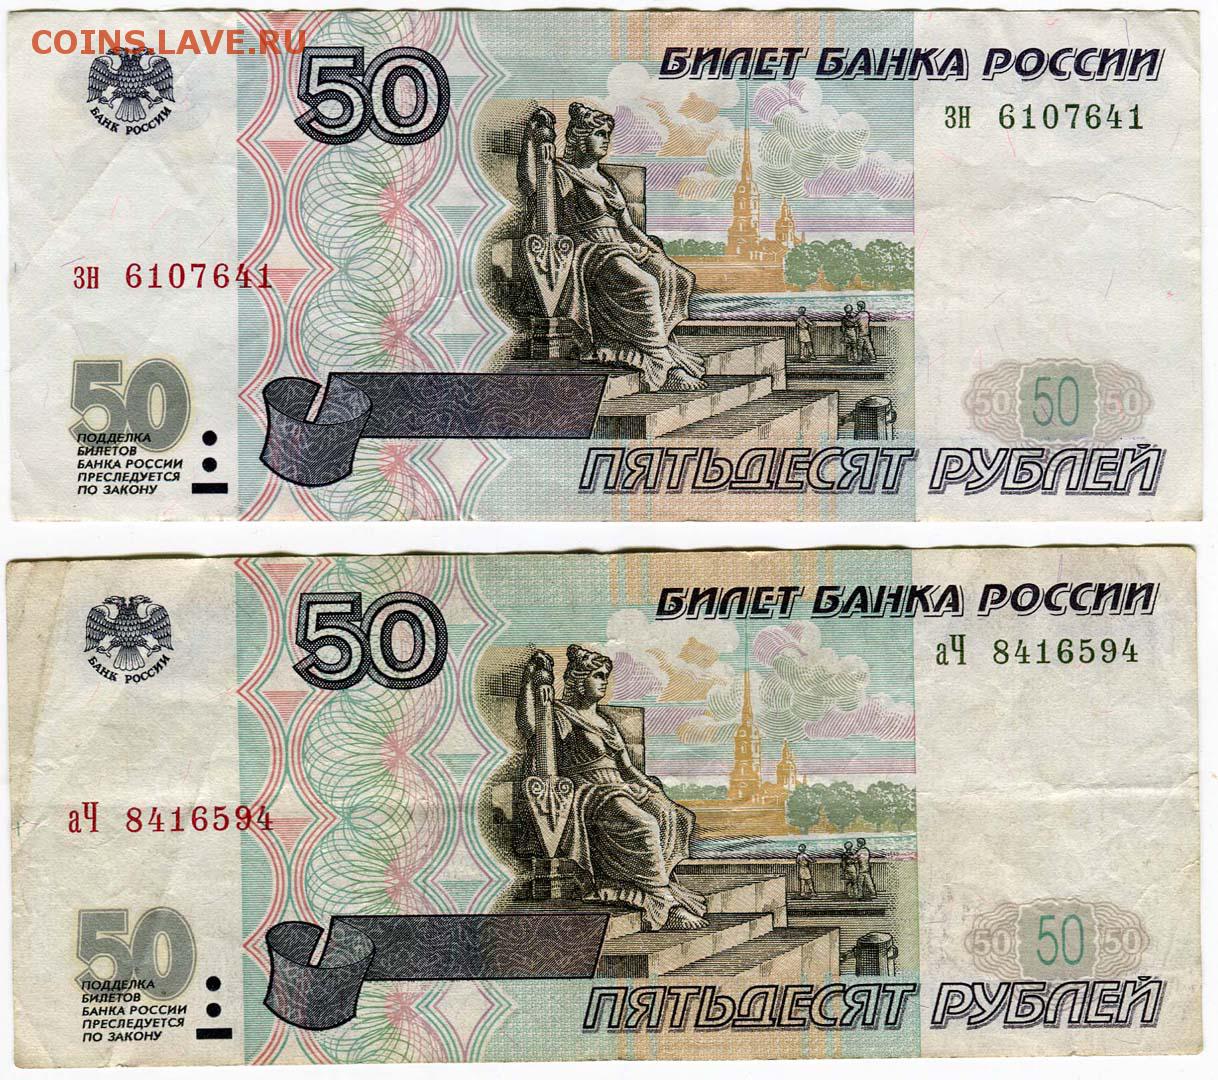 Рубль после 1 апреля. Деноминация рубля в 1998. СТО рублей до деноминации. Купюра 50 до 1997 года. Купюры РФ до деноминации.